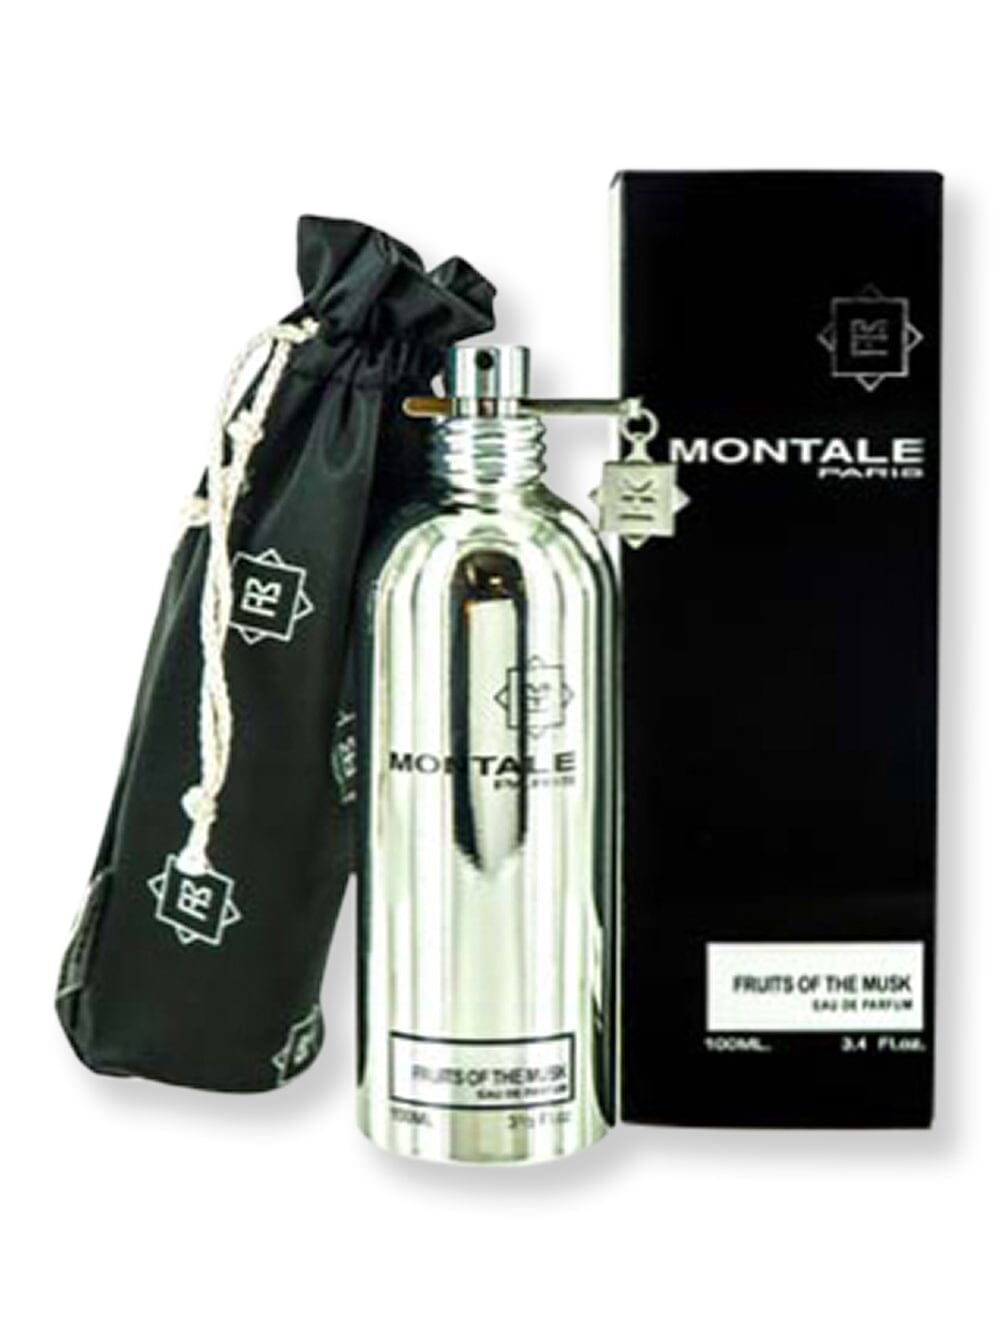 Montale Montale Fruits Of The Musk EDP Spray 3.3 oz100 ml Perfume 